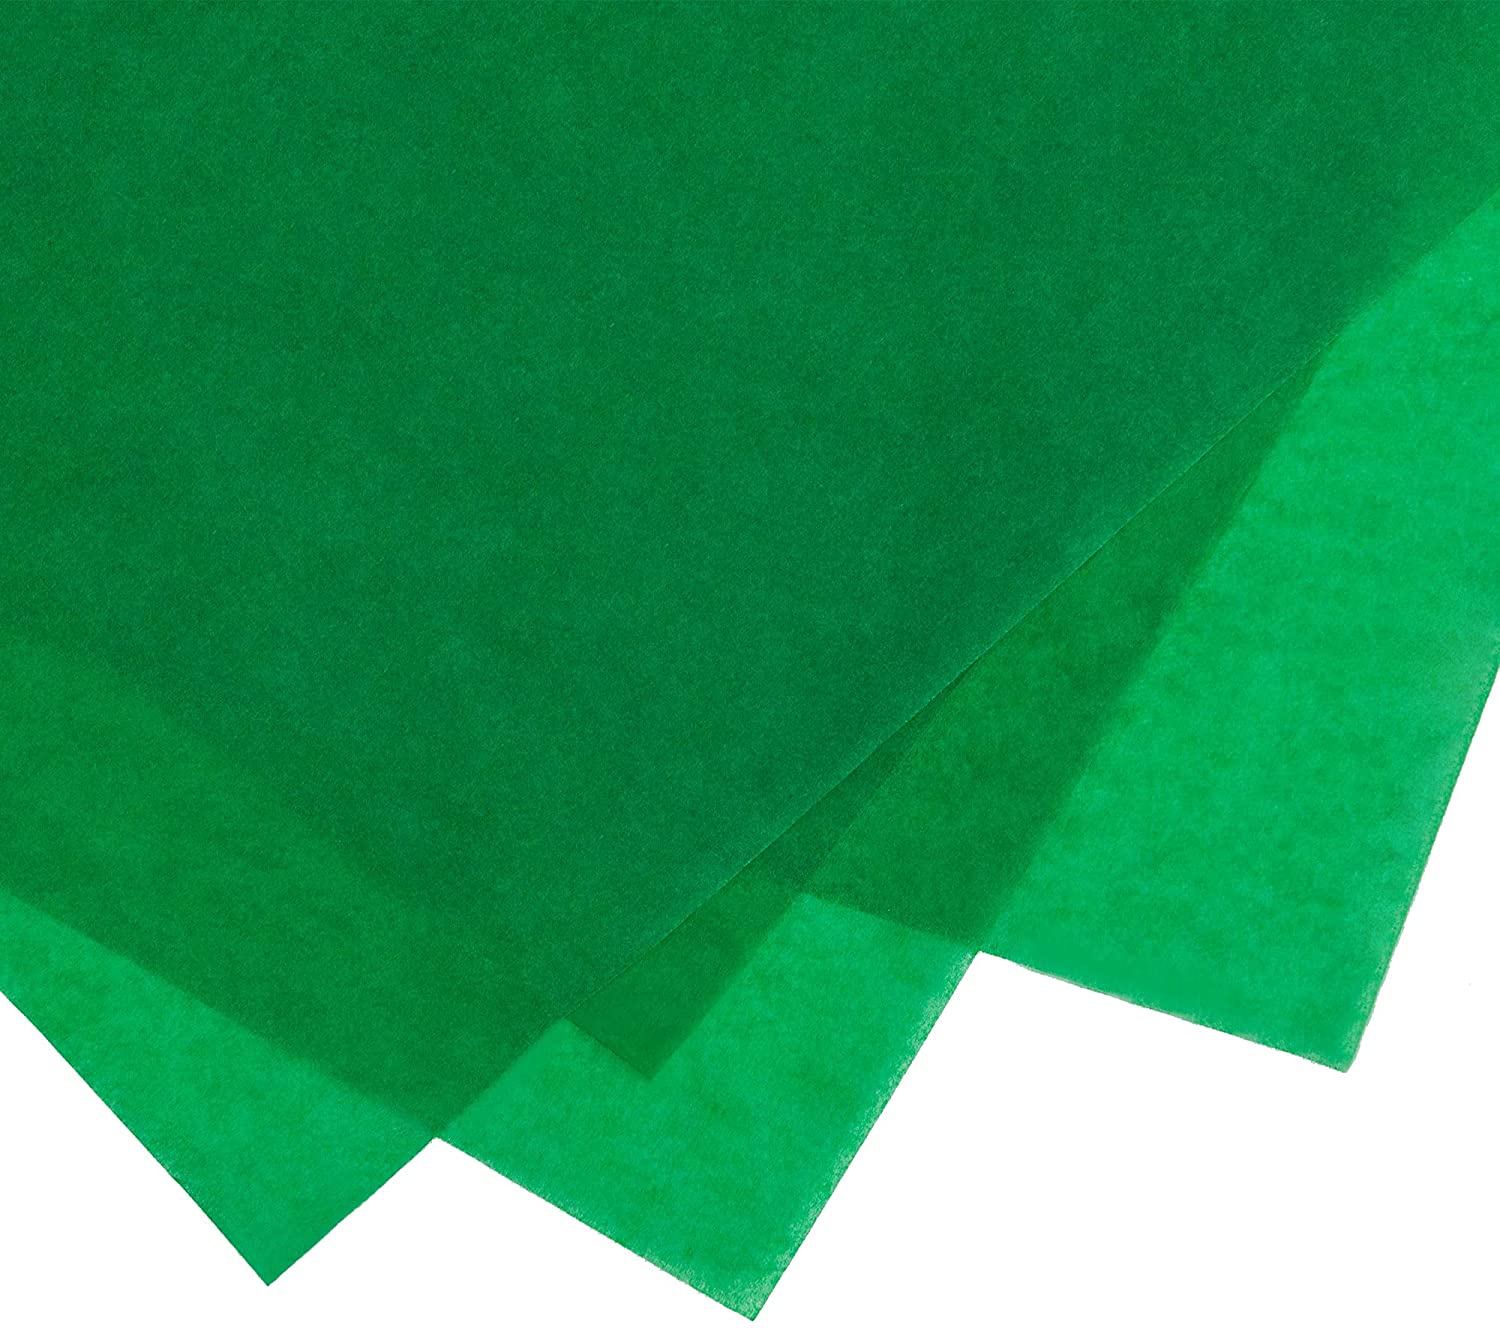 50 Sheets Dark Green Tissue Paper Bulk,29.5x 19.6,Green Tissue